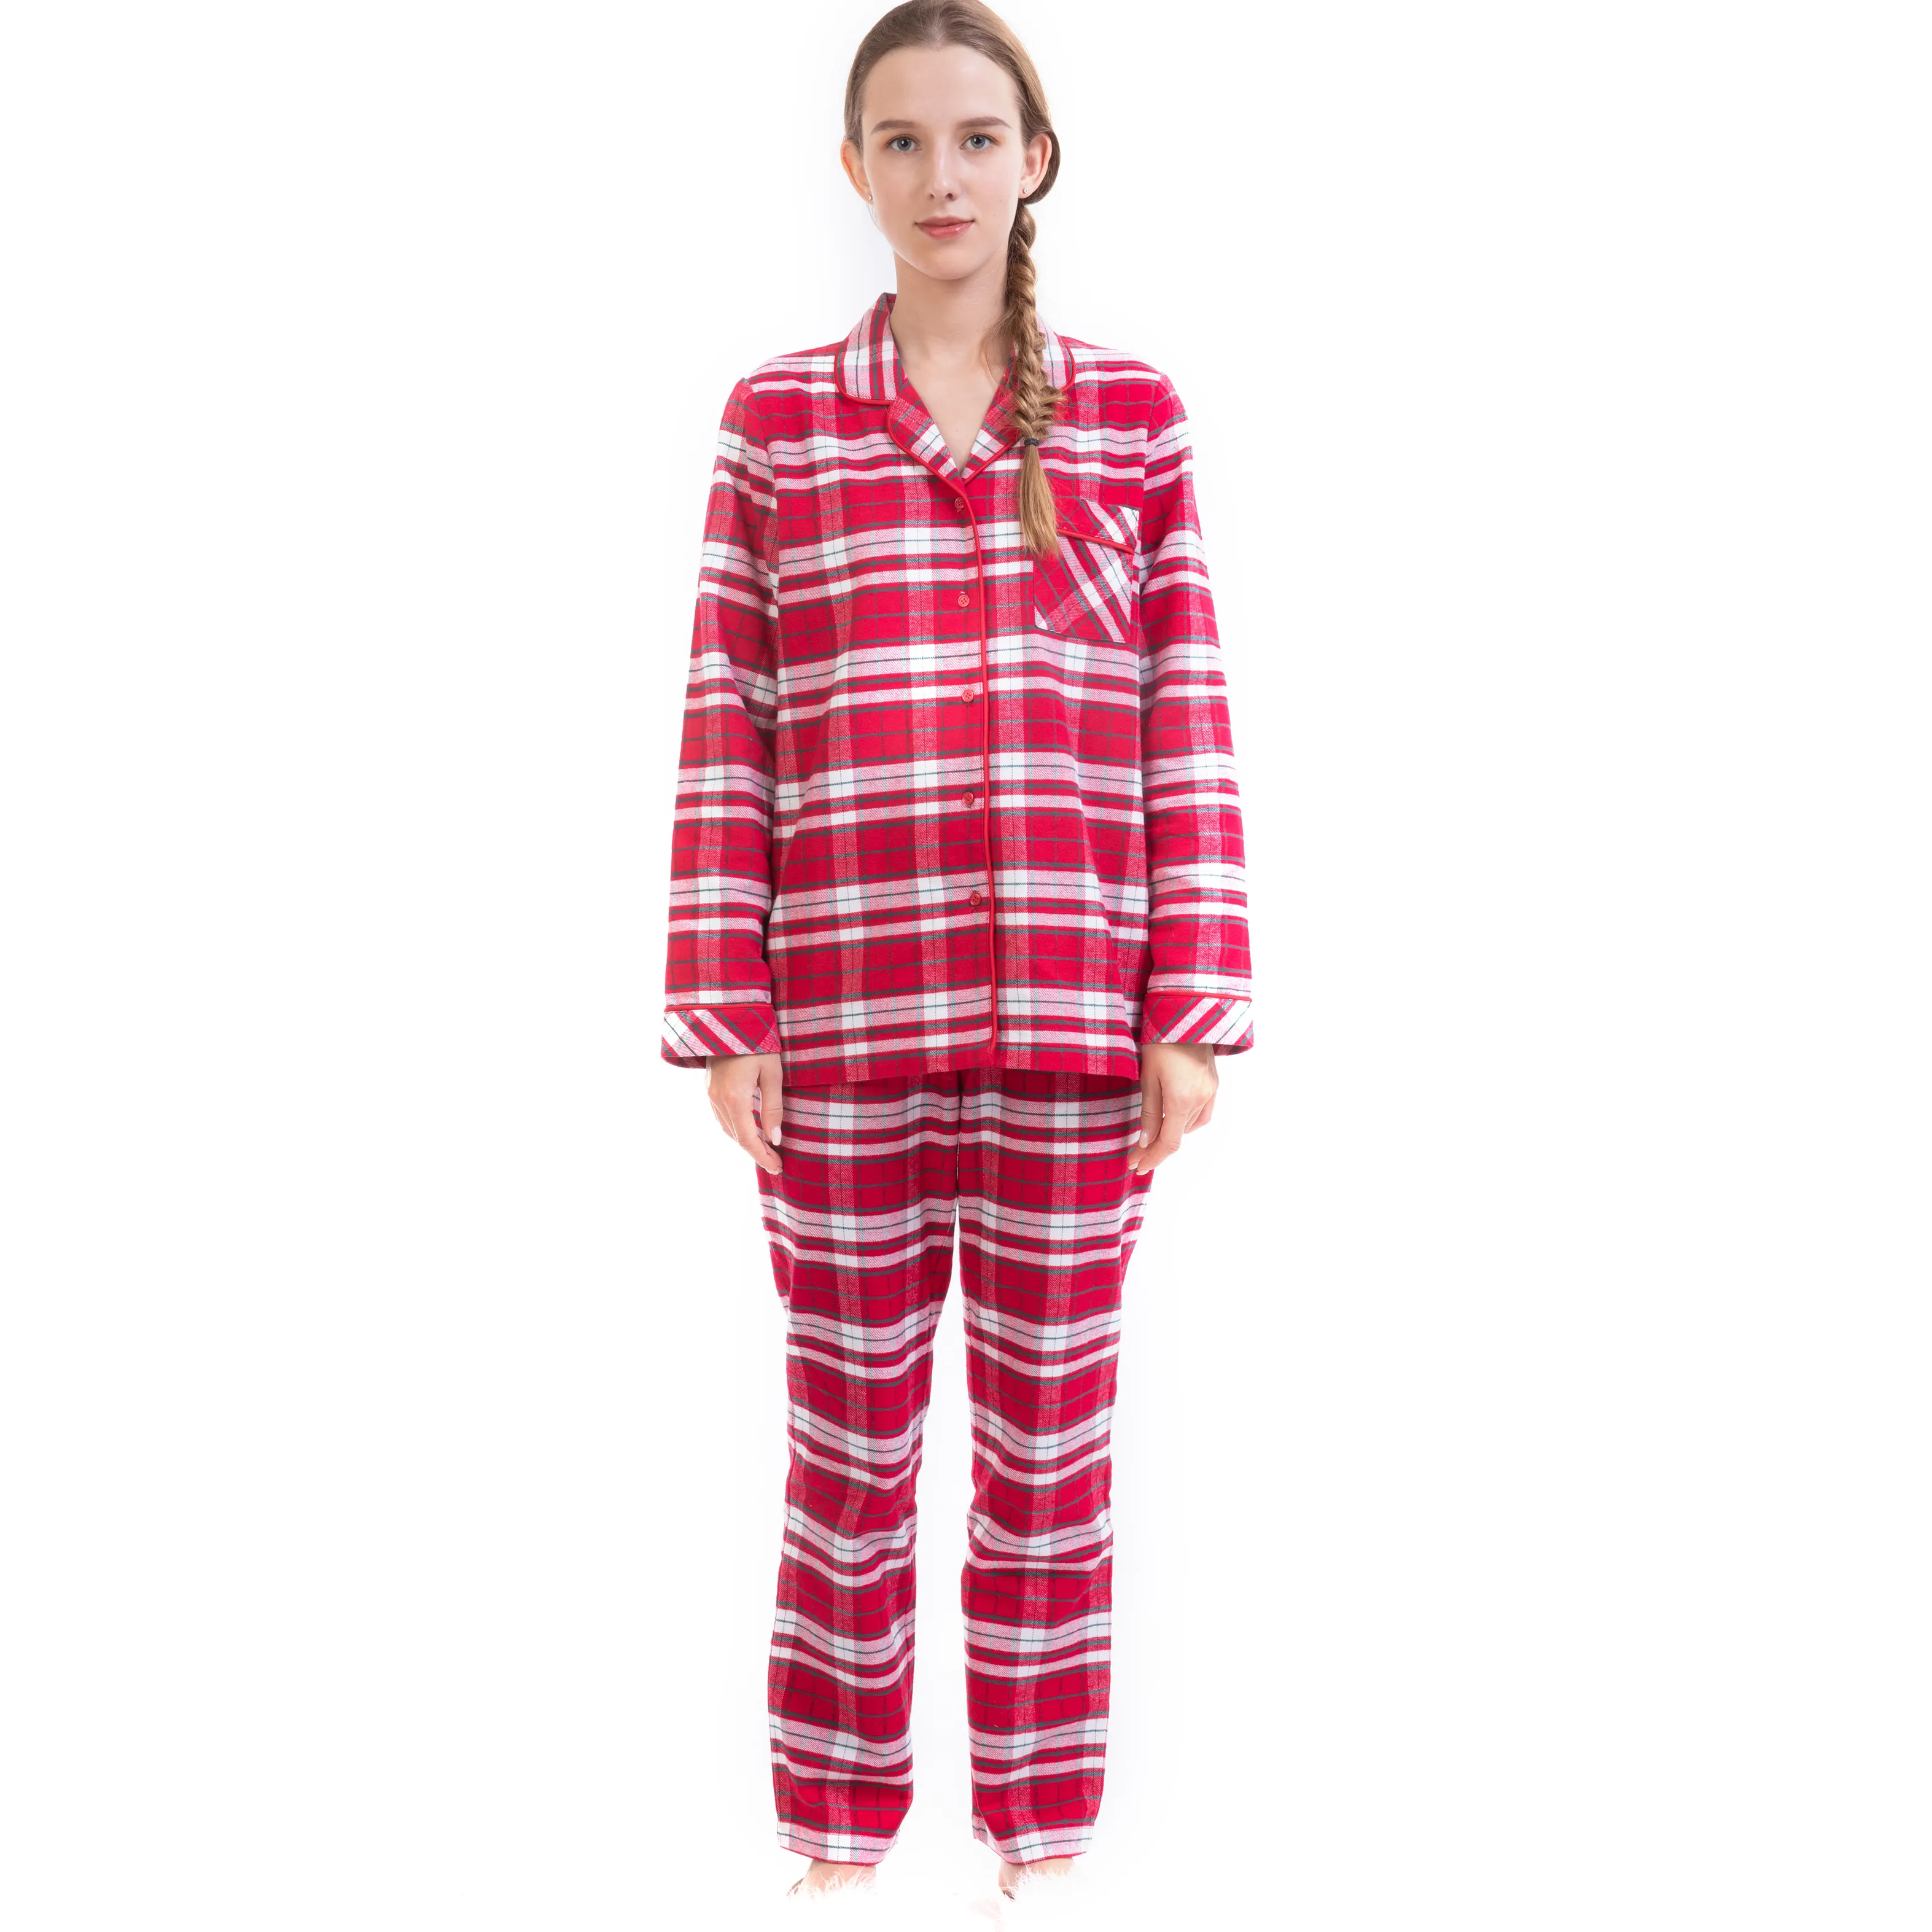 Hot Sale Women Cotton Pajamas Flannel Sets Long Sleeve Pajamas Soft Sleepwear for Women